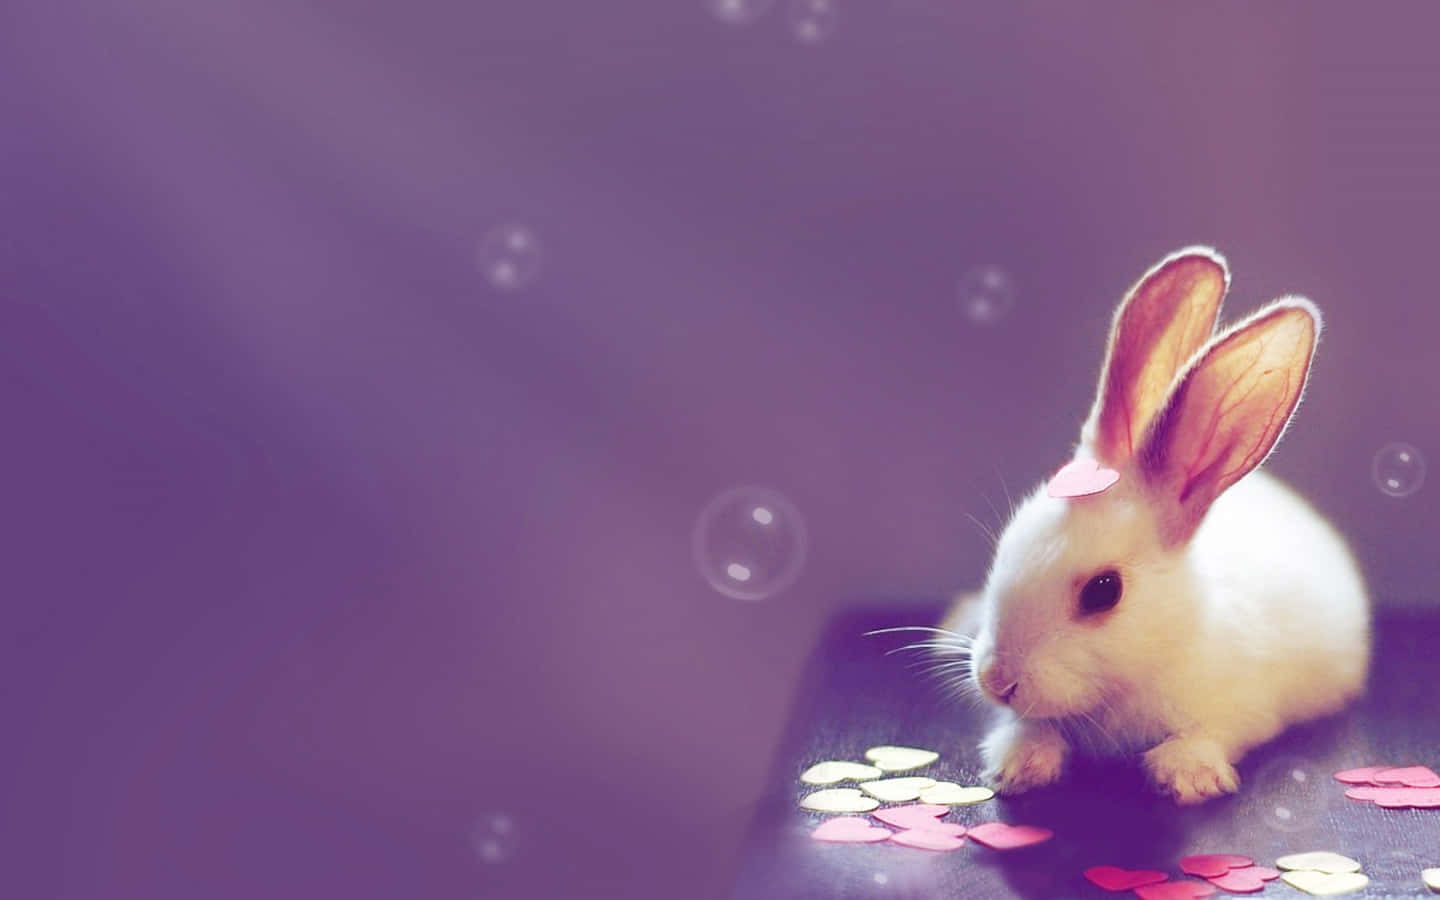 Kawaii Bunny in a Dreamy World Wallpaper